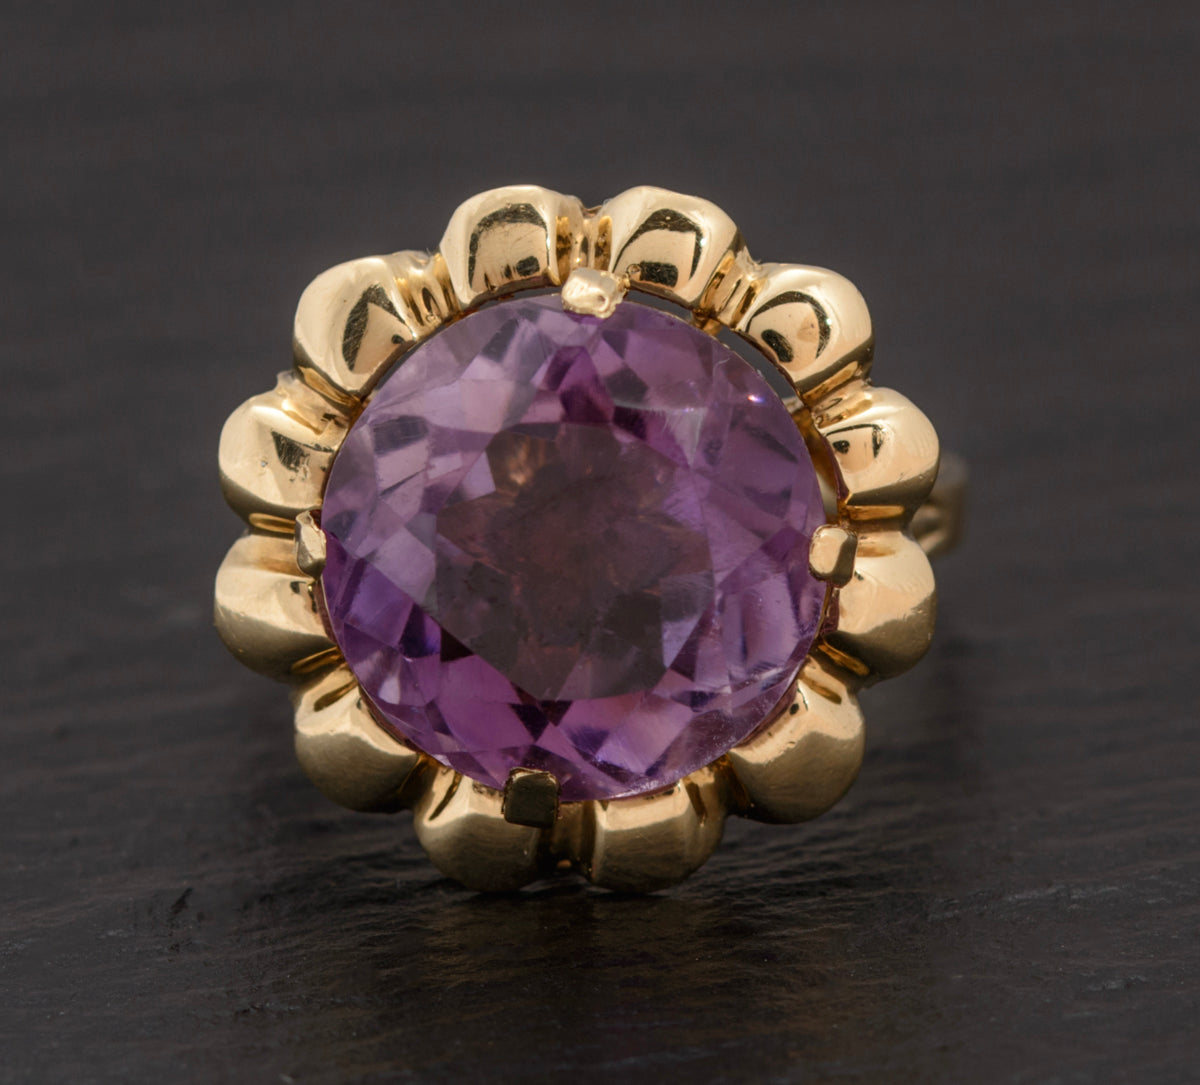 Vintage 9ct Gold Ring With Natural Amethyst Gemstone Modernist Design c.1960 (A1532)